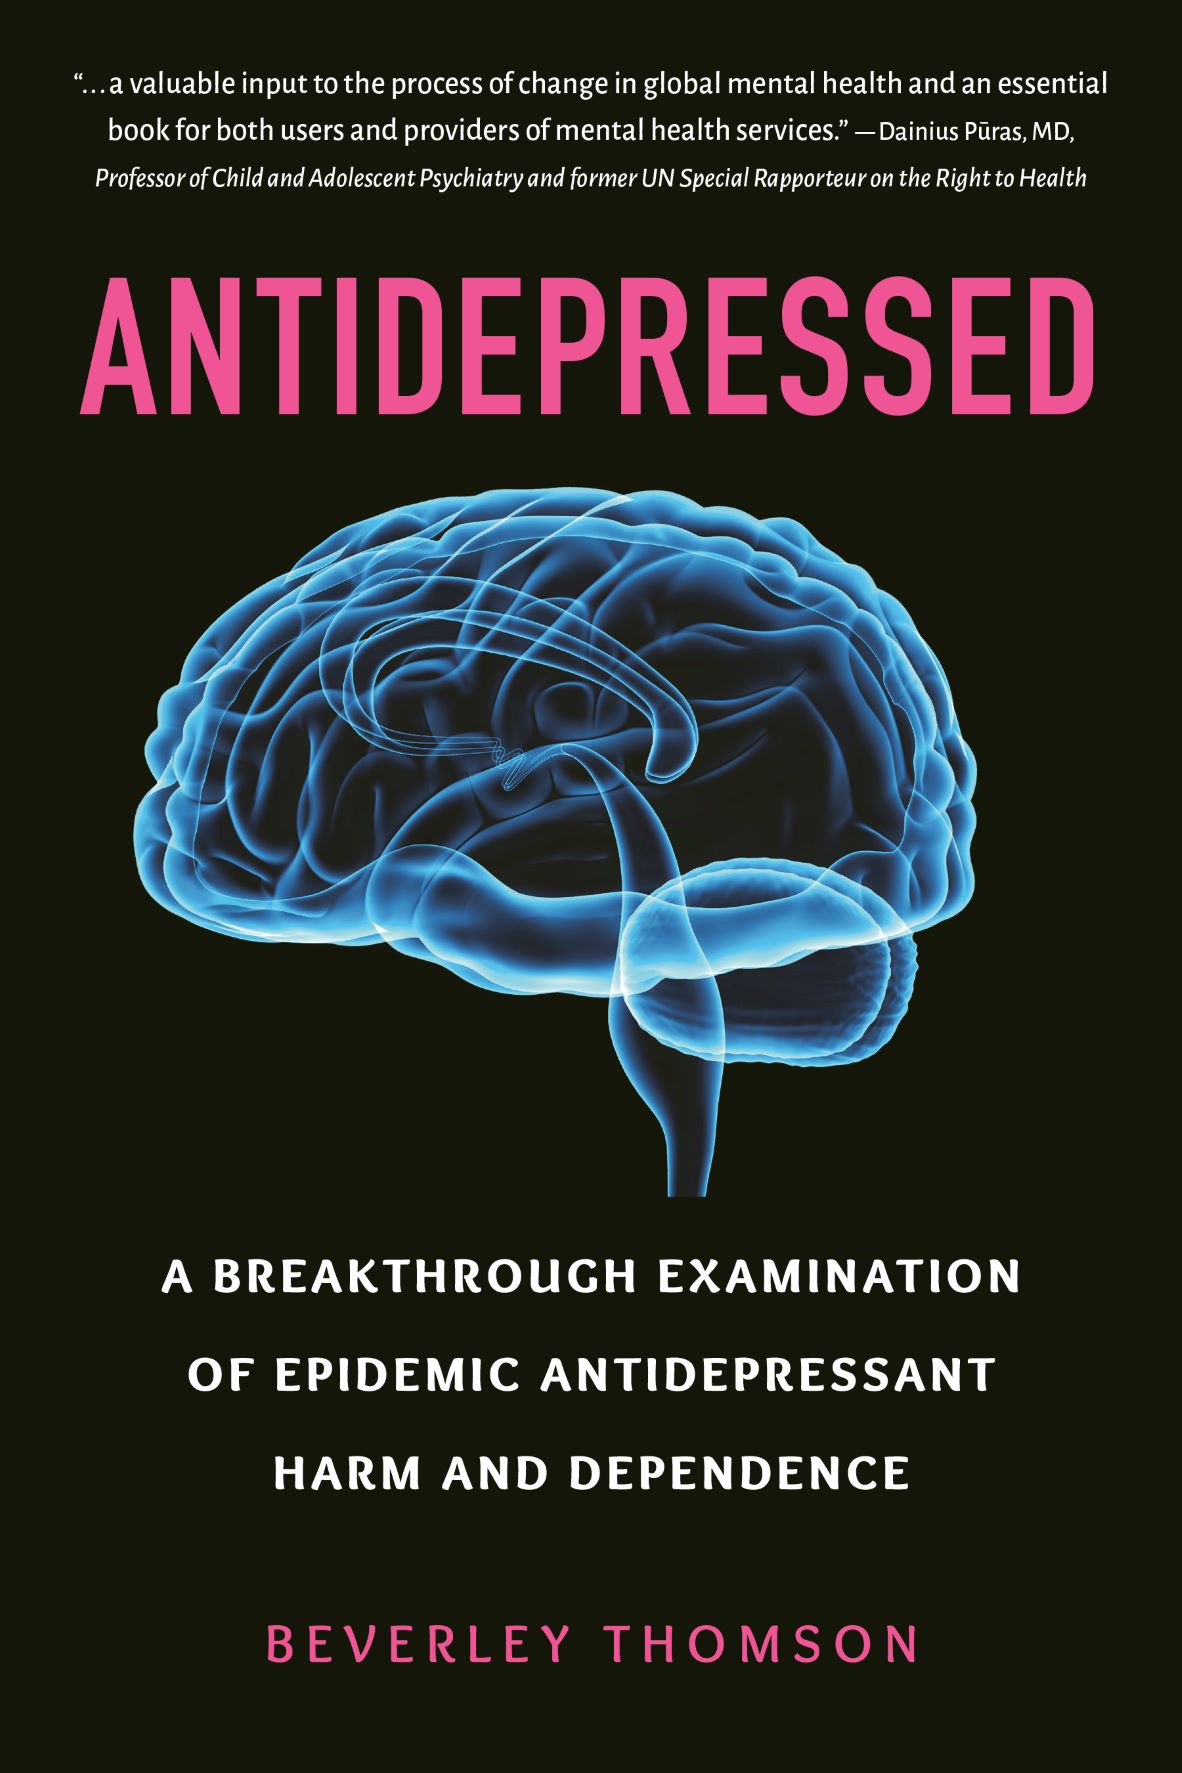 Anti-Depressed (A Breakthrough Examination of Epidemic Antidepressant Harm And Dependence)